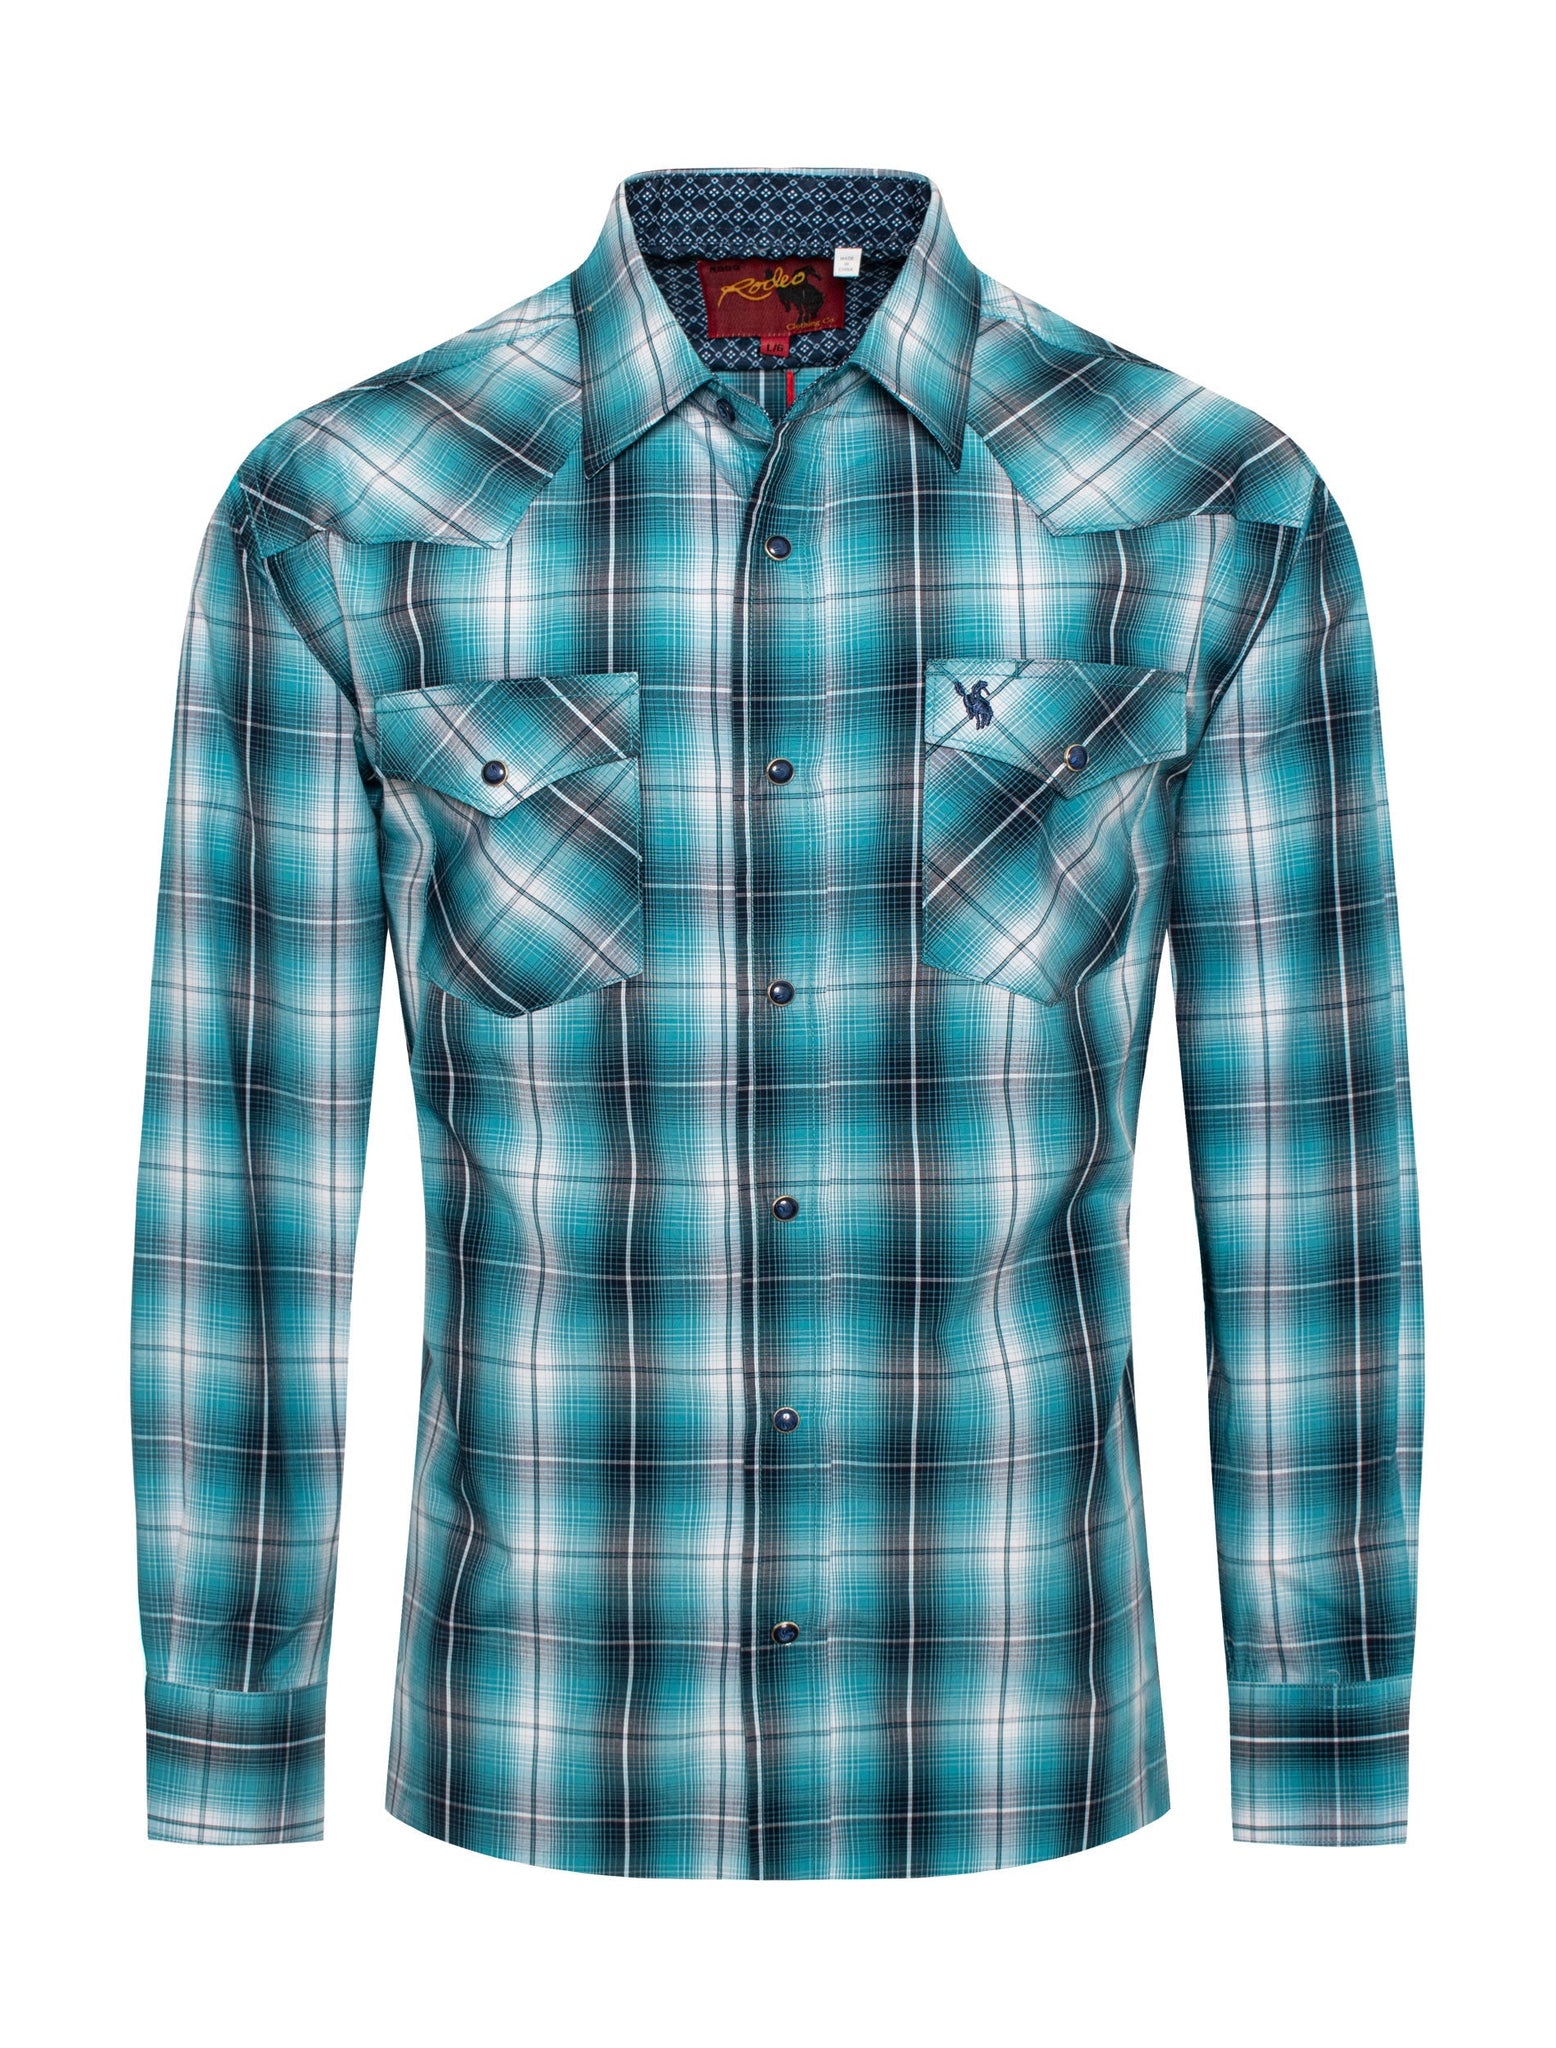 Men's Western Long Sleeve Pearl Snap Plaid Shirt-PS400-412